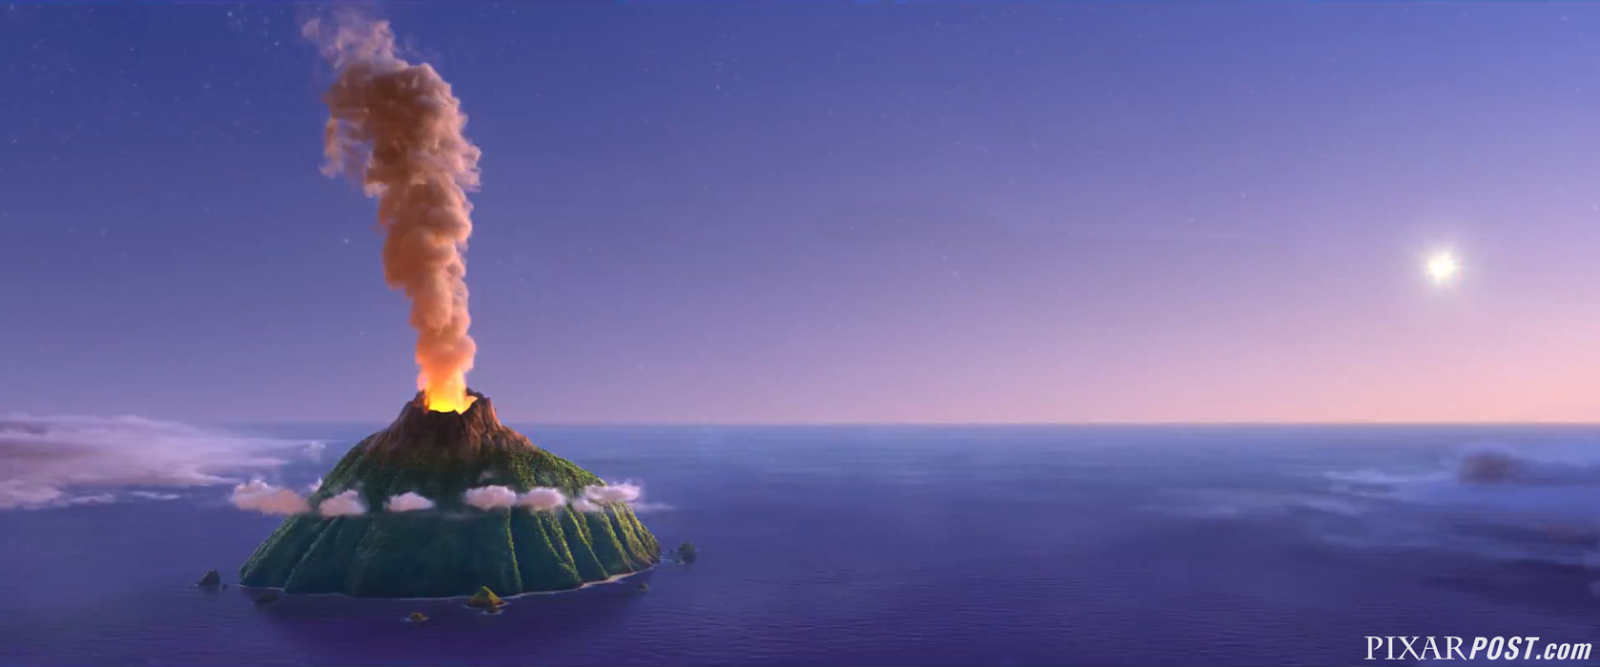 First Clip Of Pixars Upcoming Short Lava Pixar Post